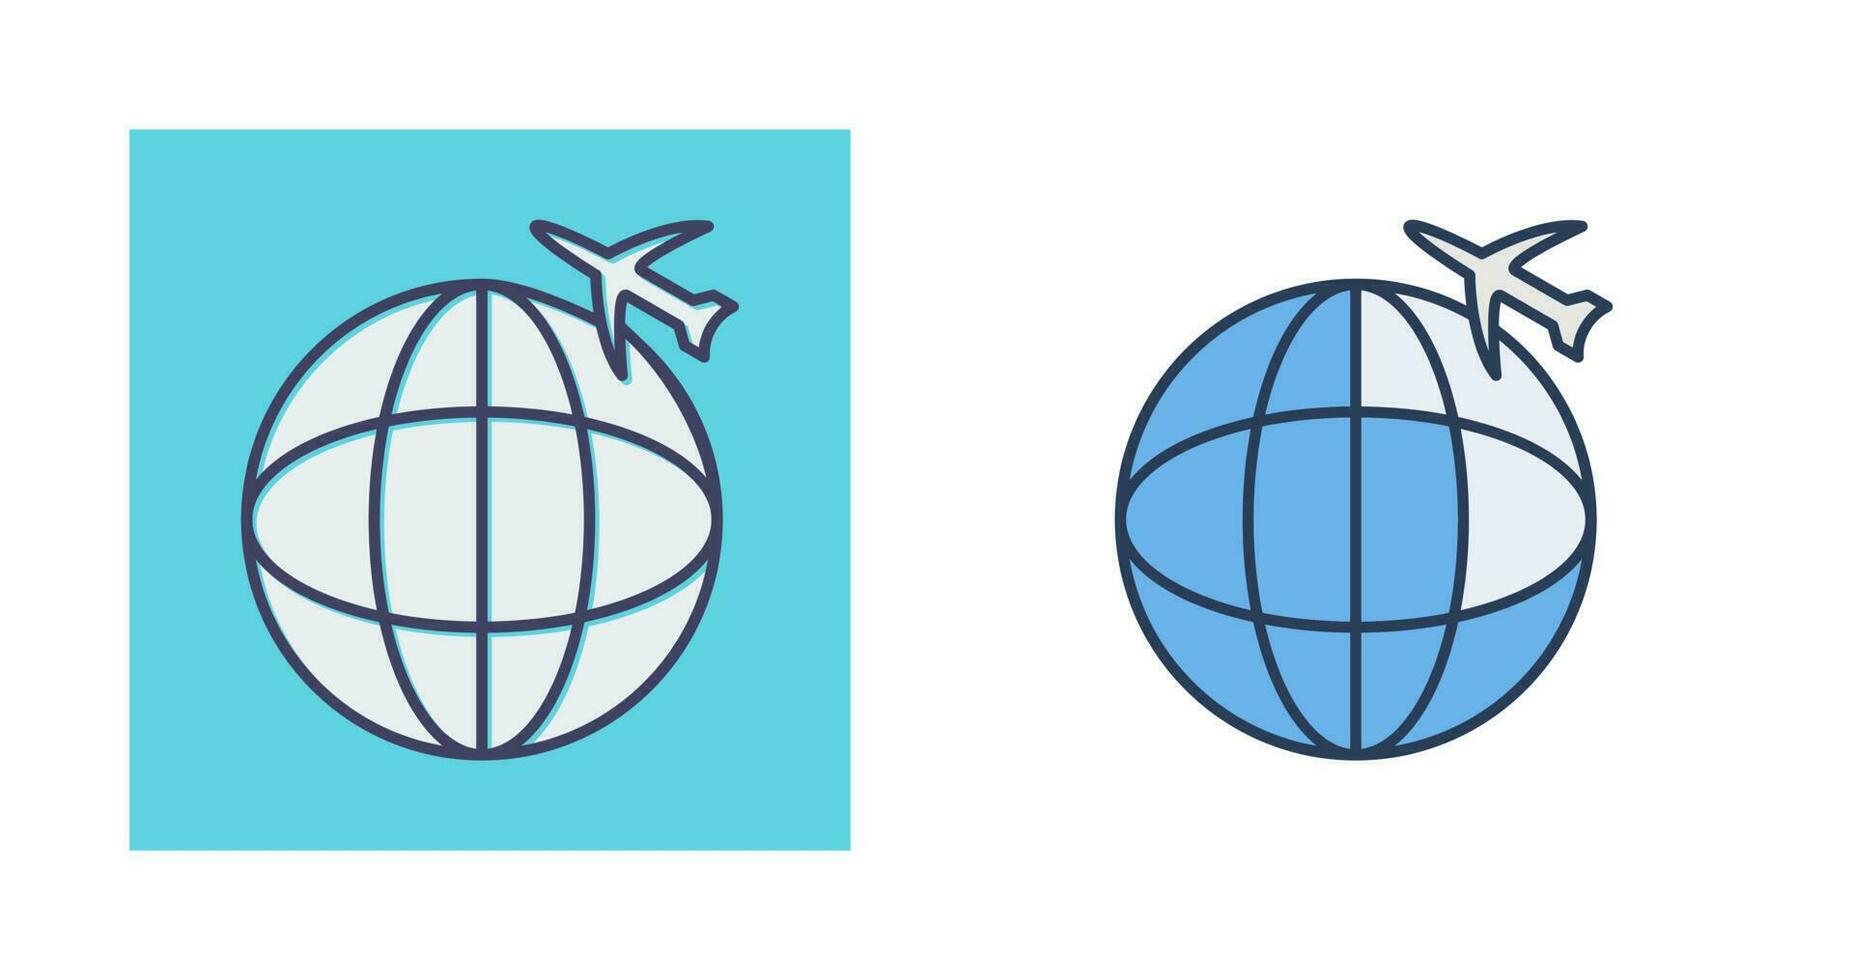 Vektorsymbol für internationale Flüge vektor